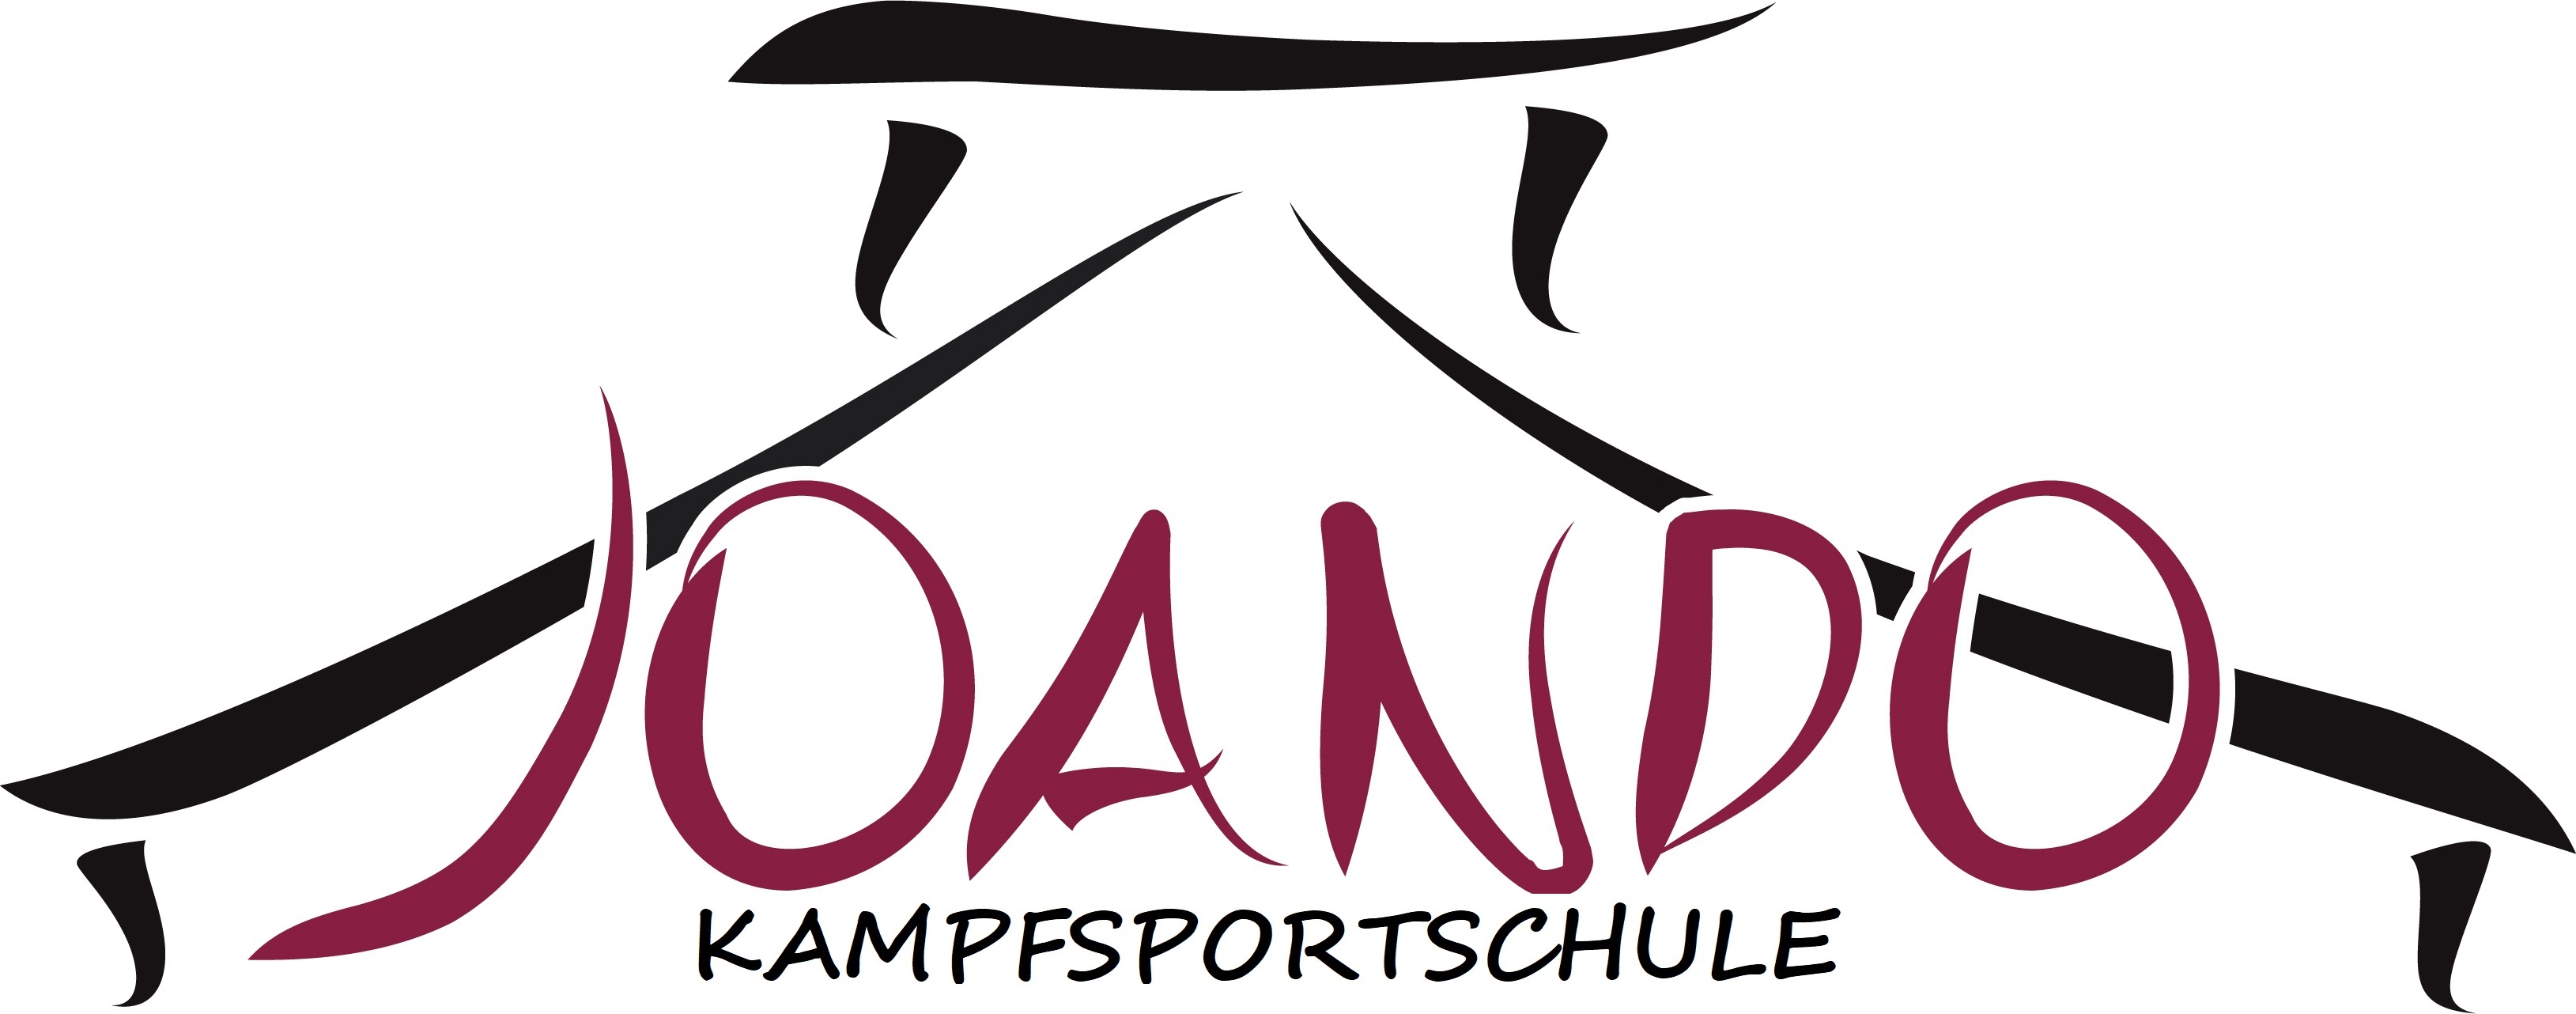 (c) Joando-kampfsportschule.at